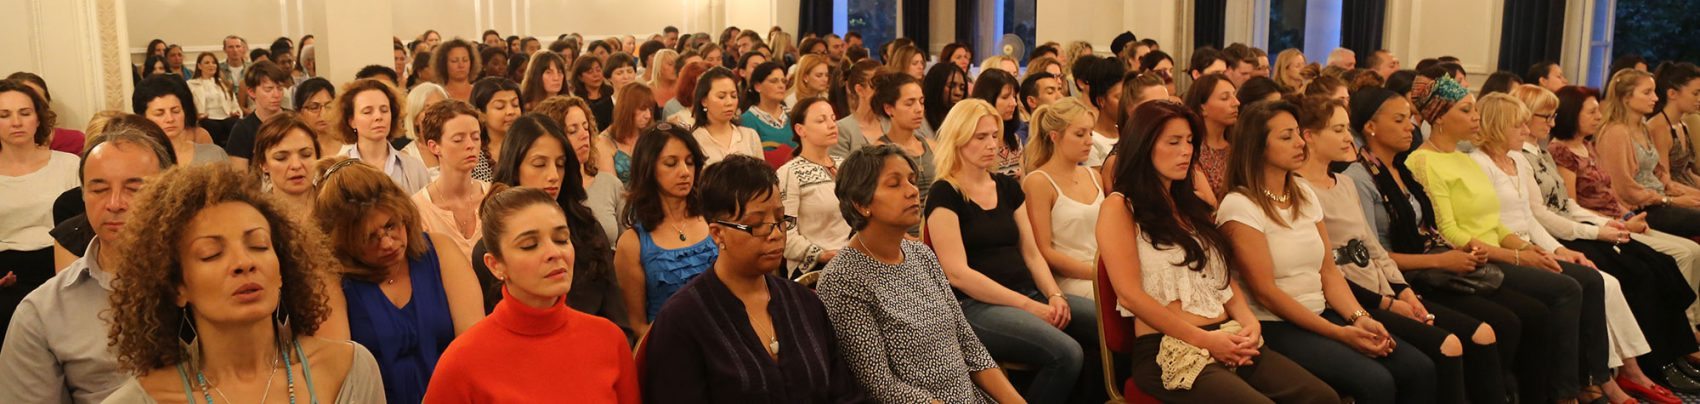 MeditationEvening Crowd - ThetaHealing® Meditation Evening and Sound Bath - Soul Healing